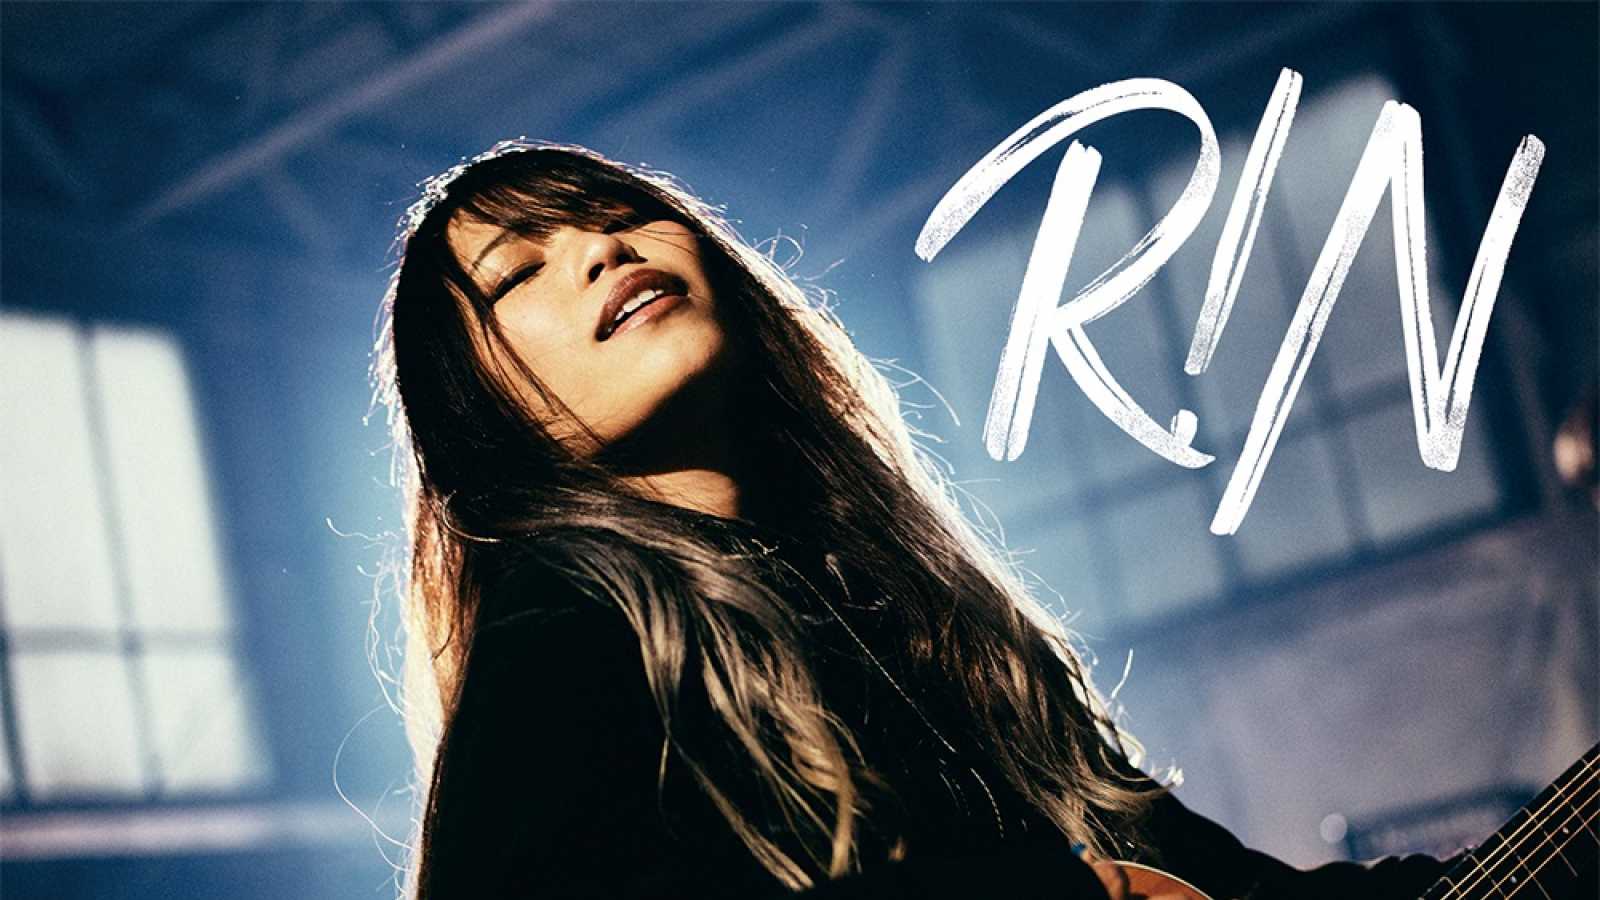 Novo single de R!N © R!N/Gemie. All rights reserved.